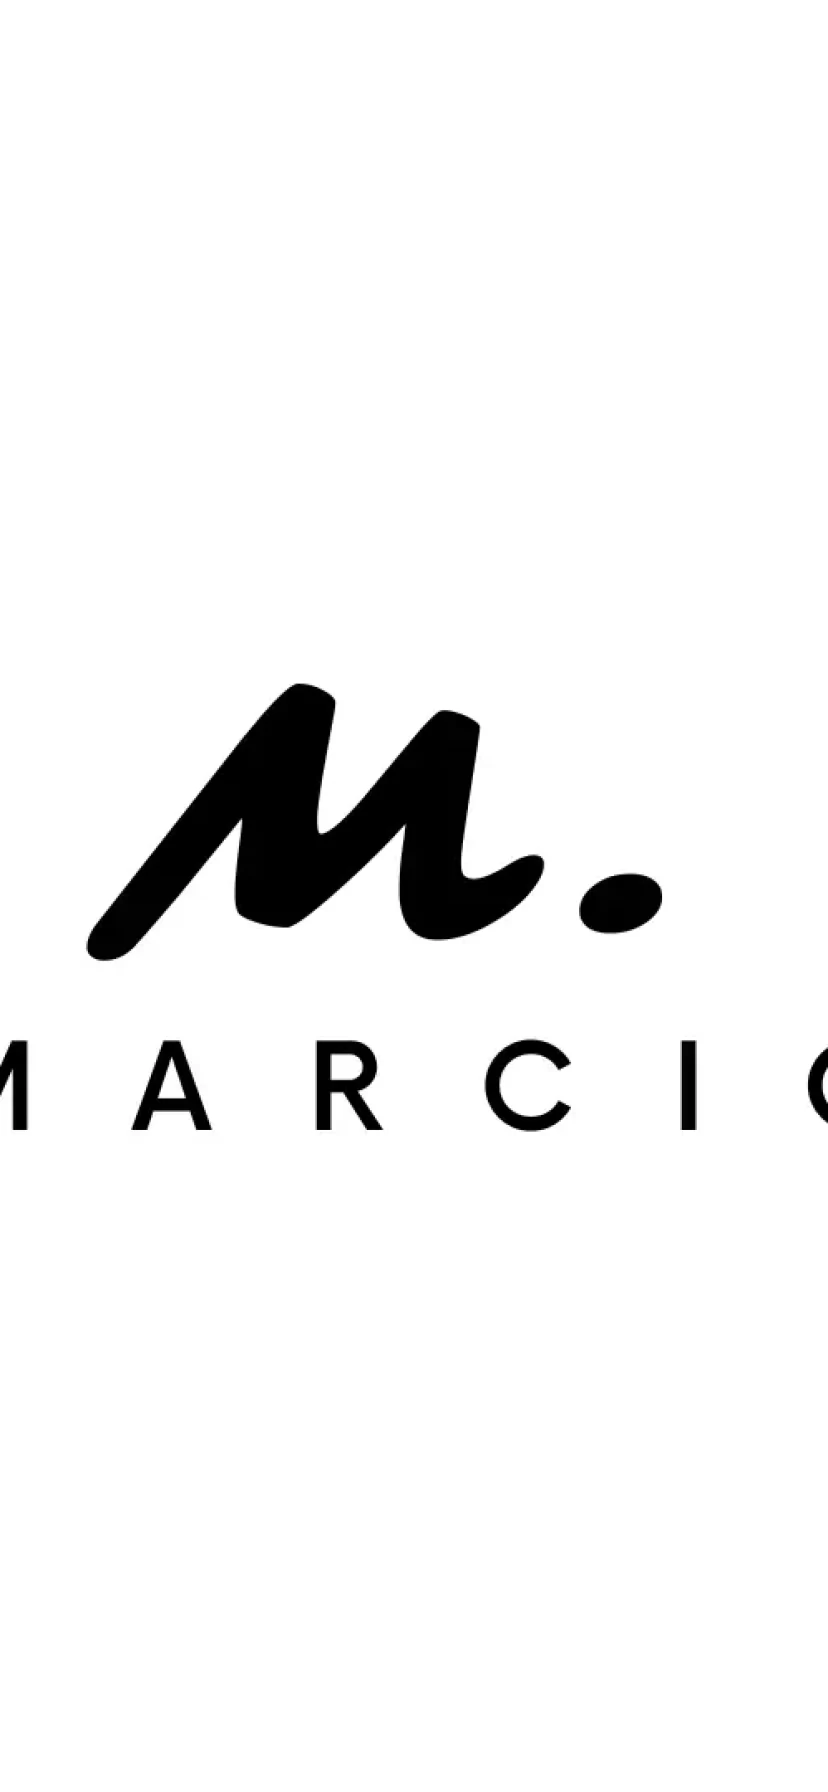 Marcio.co domain name for sale